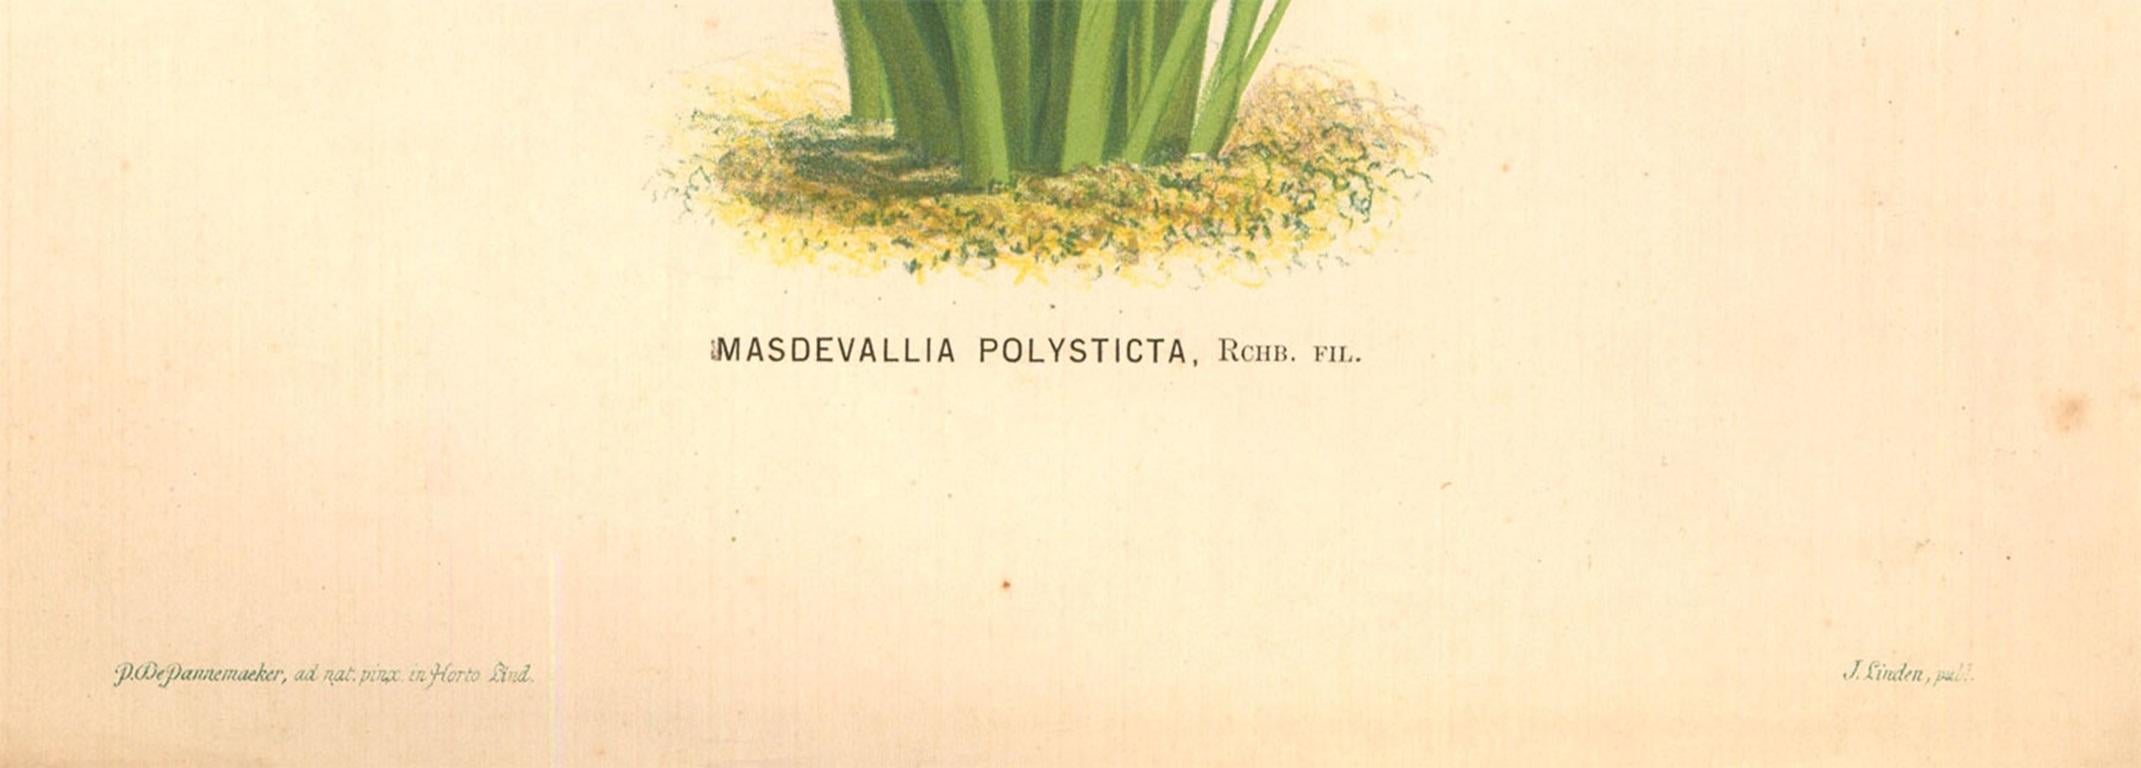 Peter De Pannemaeker - Mid 19th Century Lithograph, Masdevallia Polysticta 2